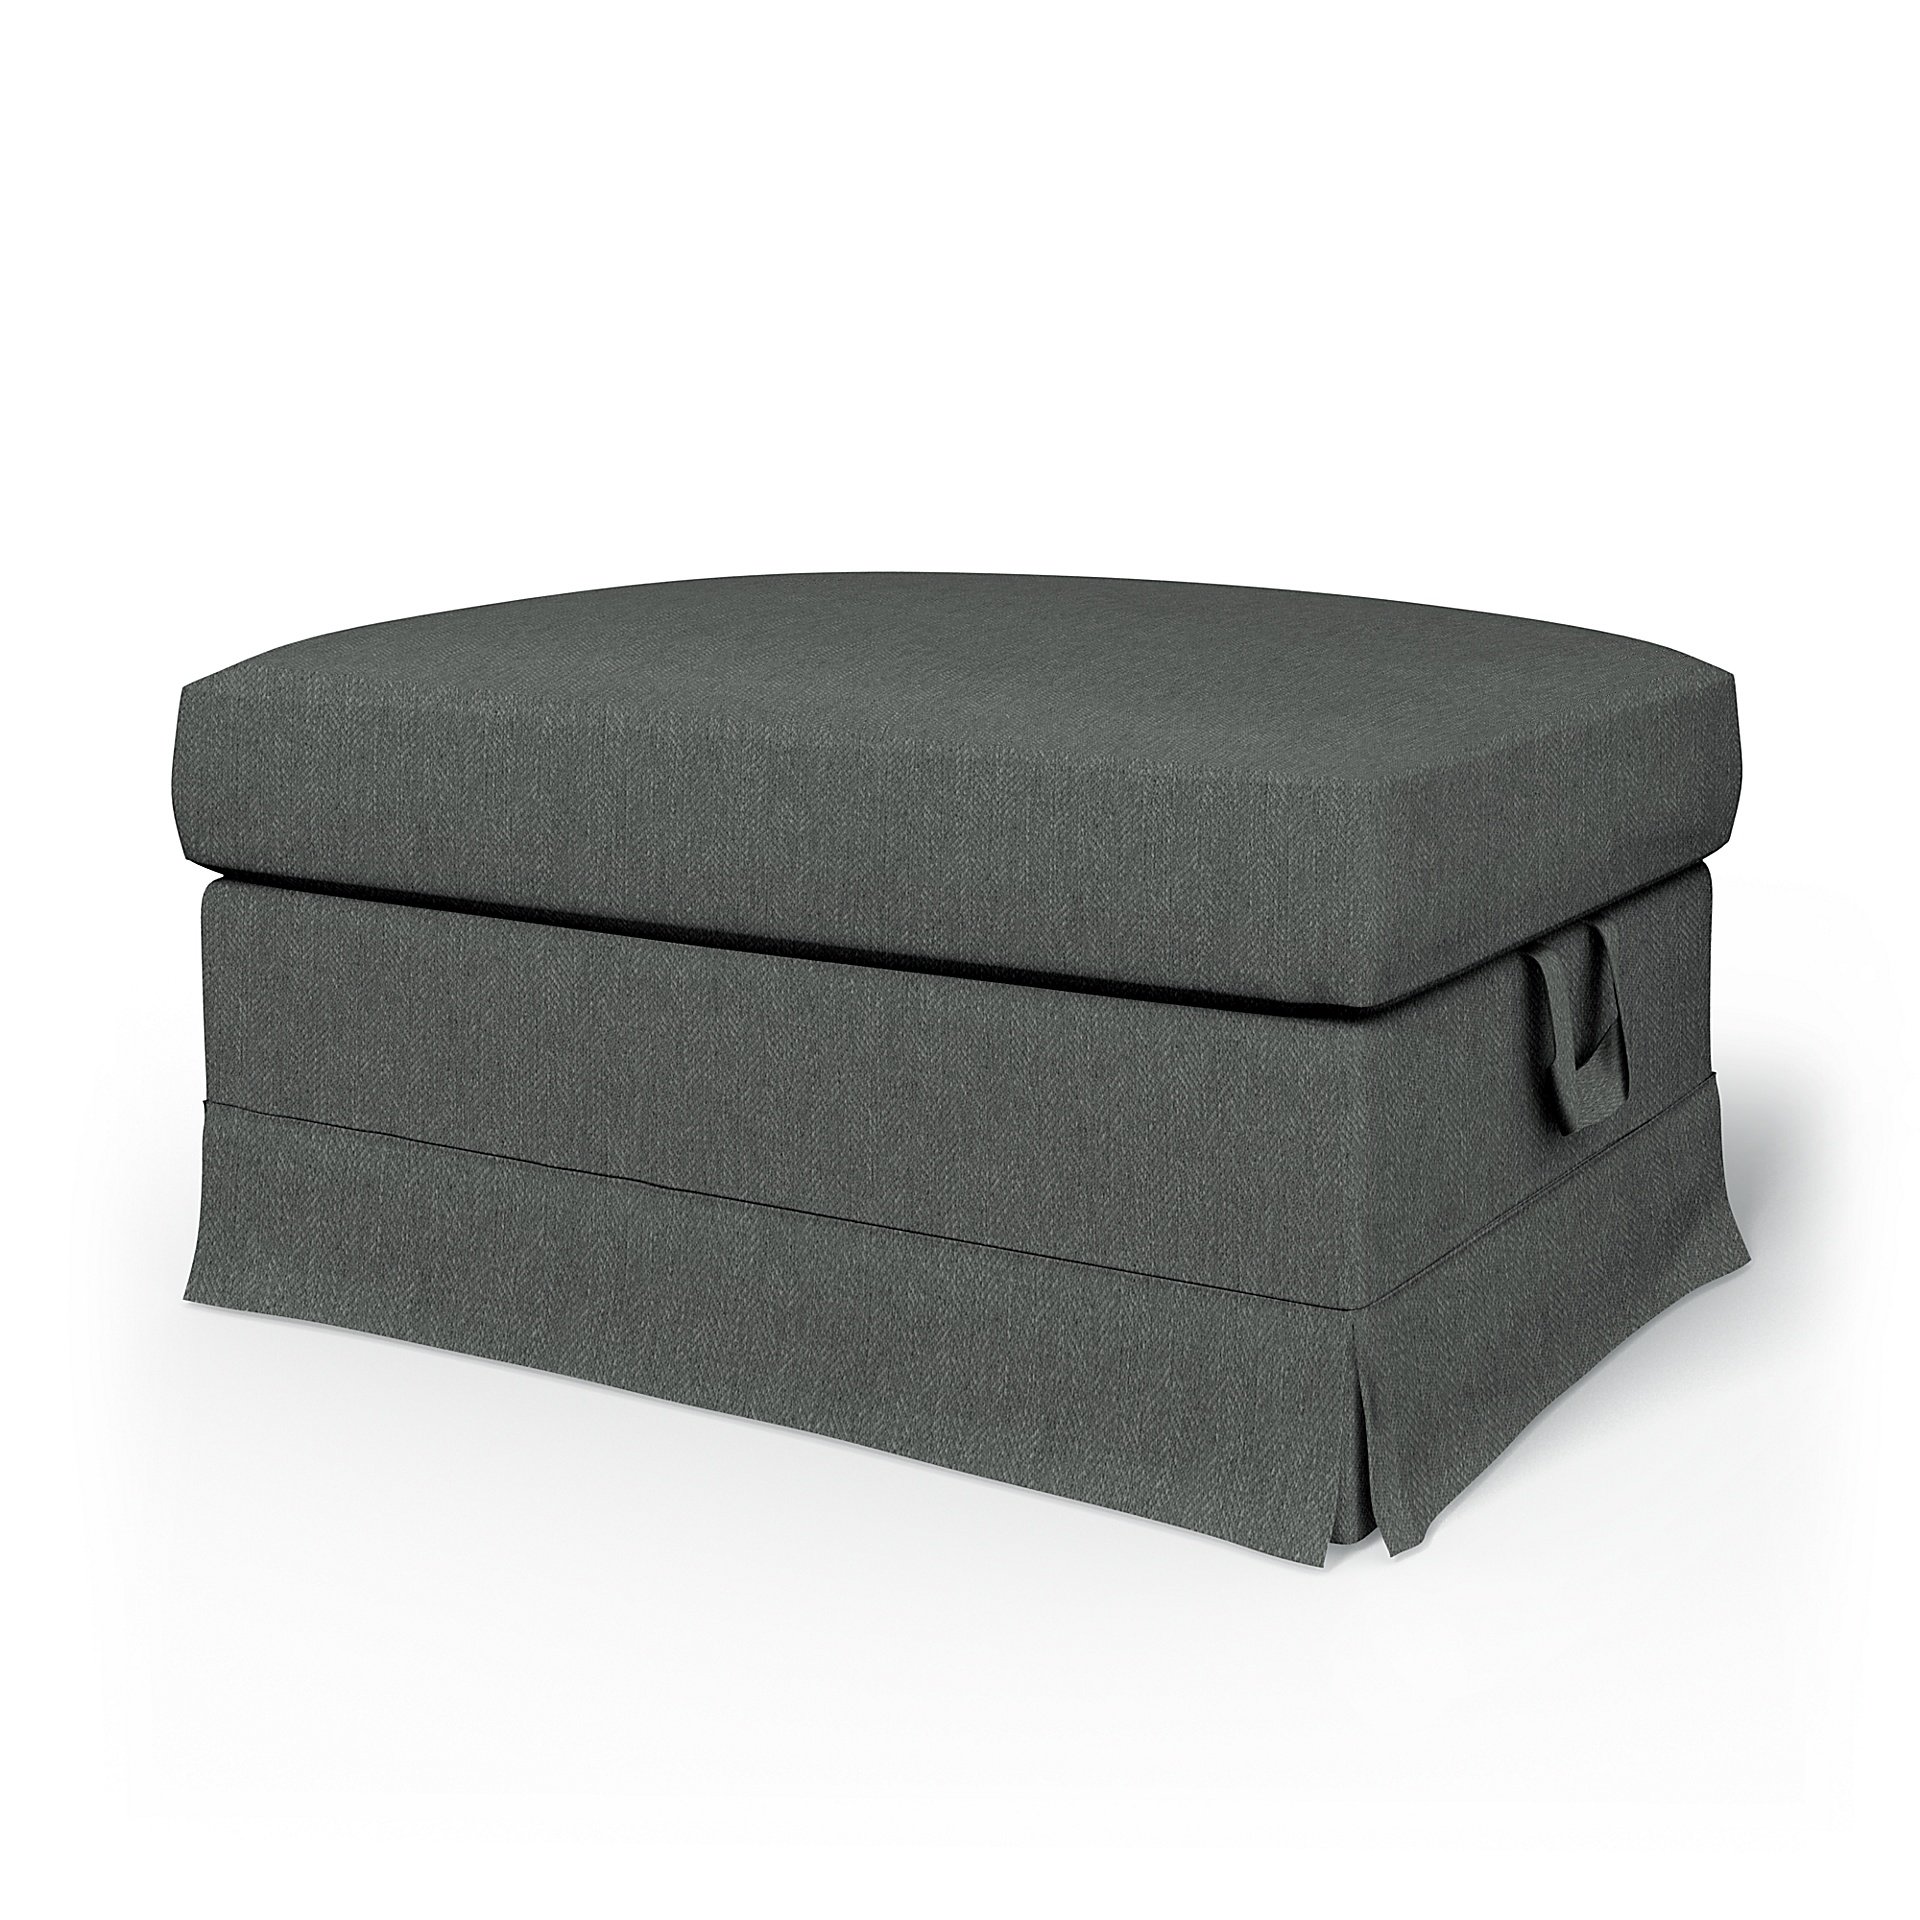 IKEA - Ektorp Footstool Cover, Laurel, Boucle & Texture - Bemz